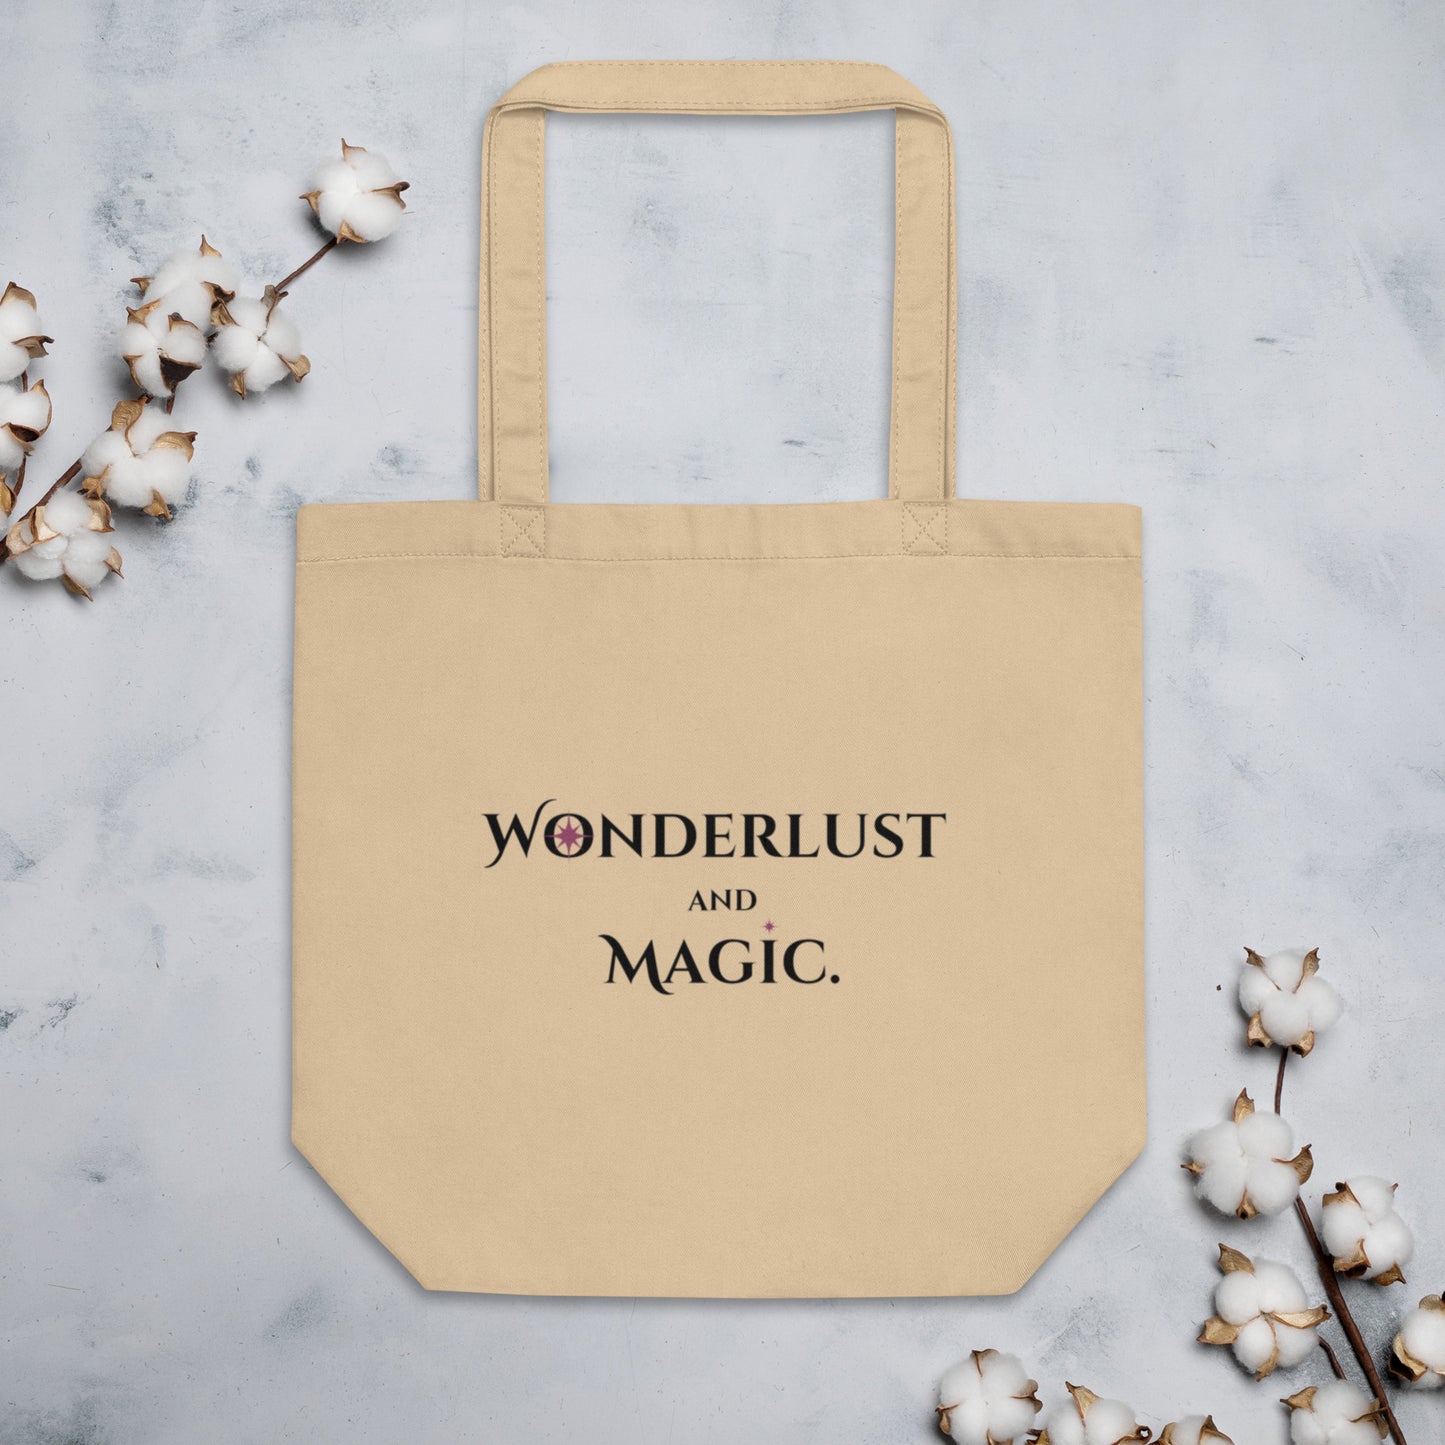 Wonderlust and Magic Light Eco Tote Bag